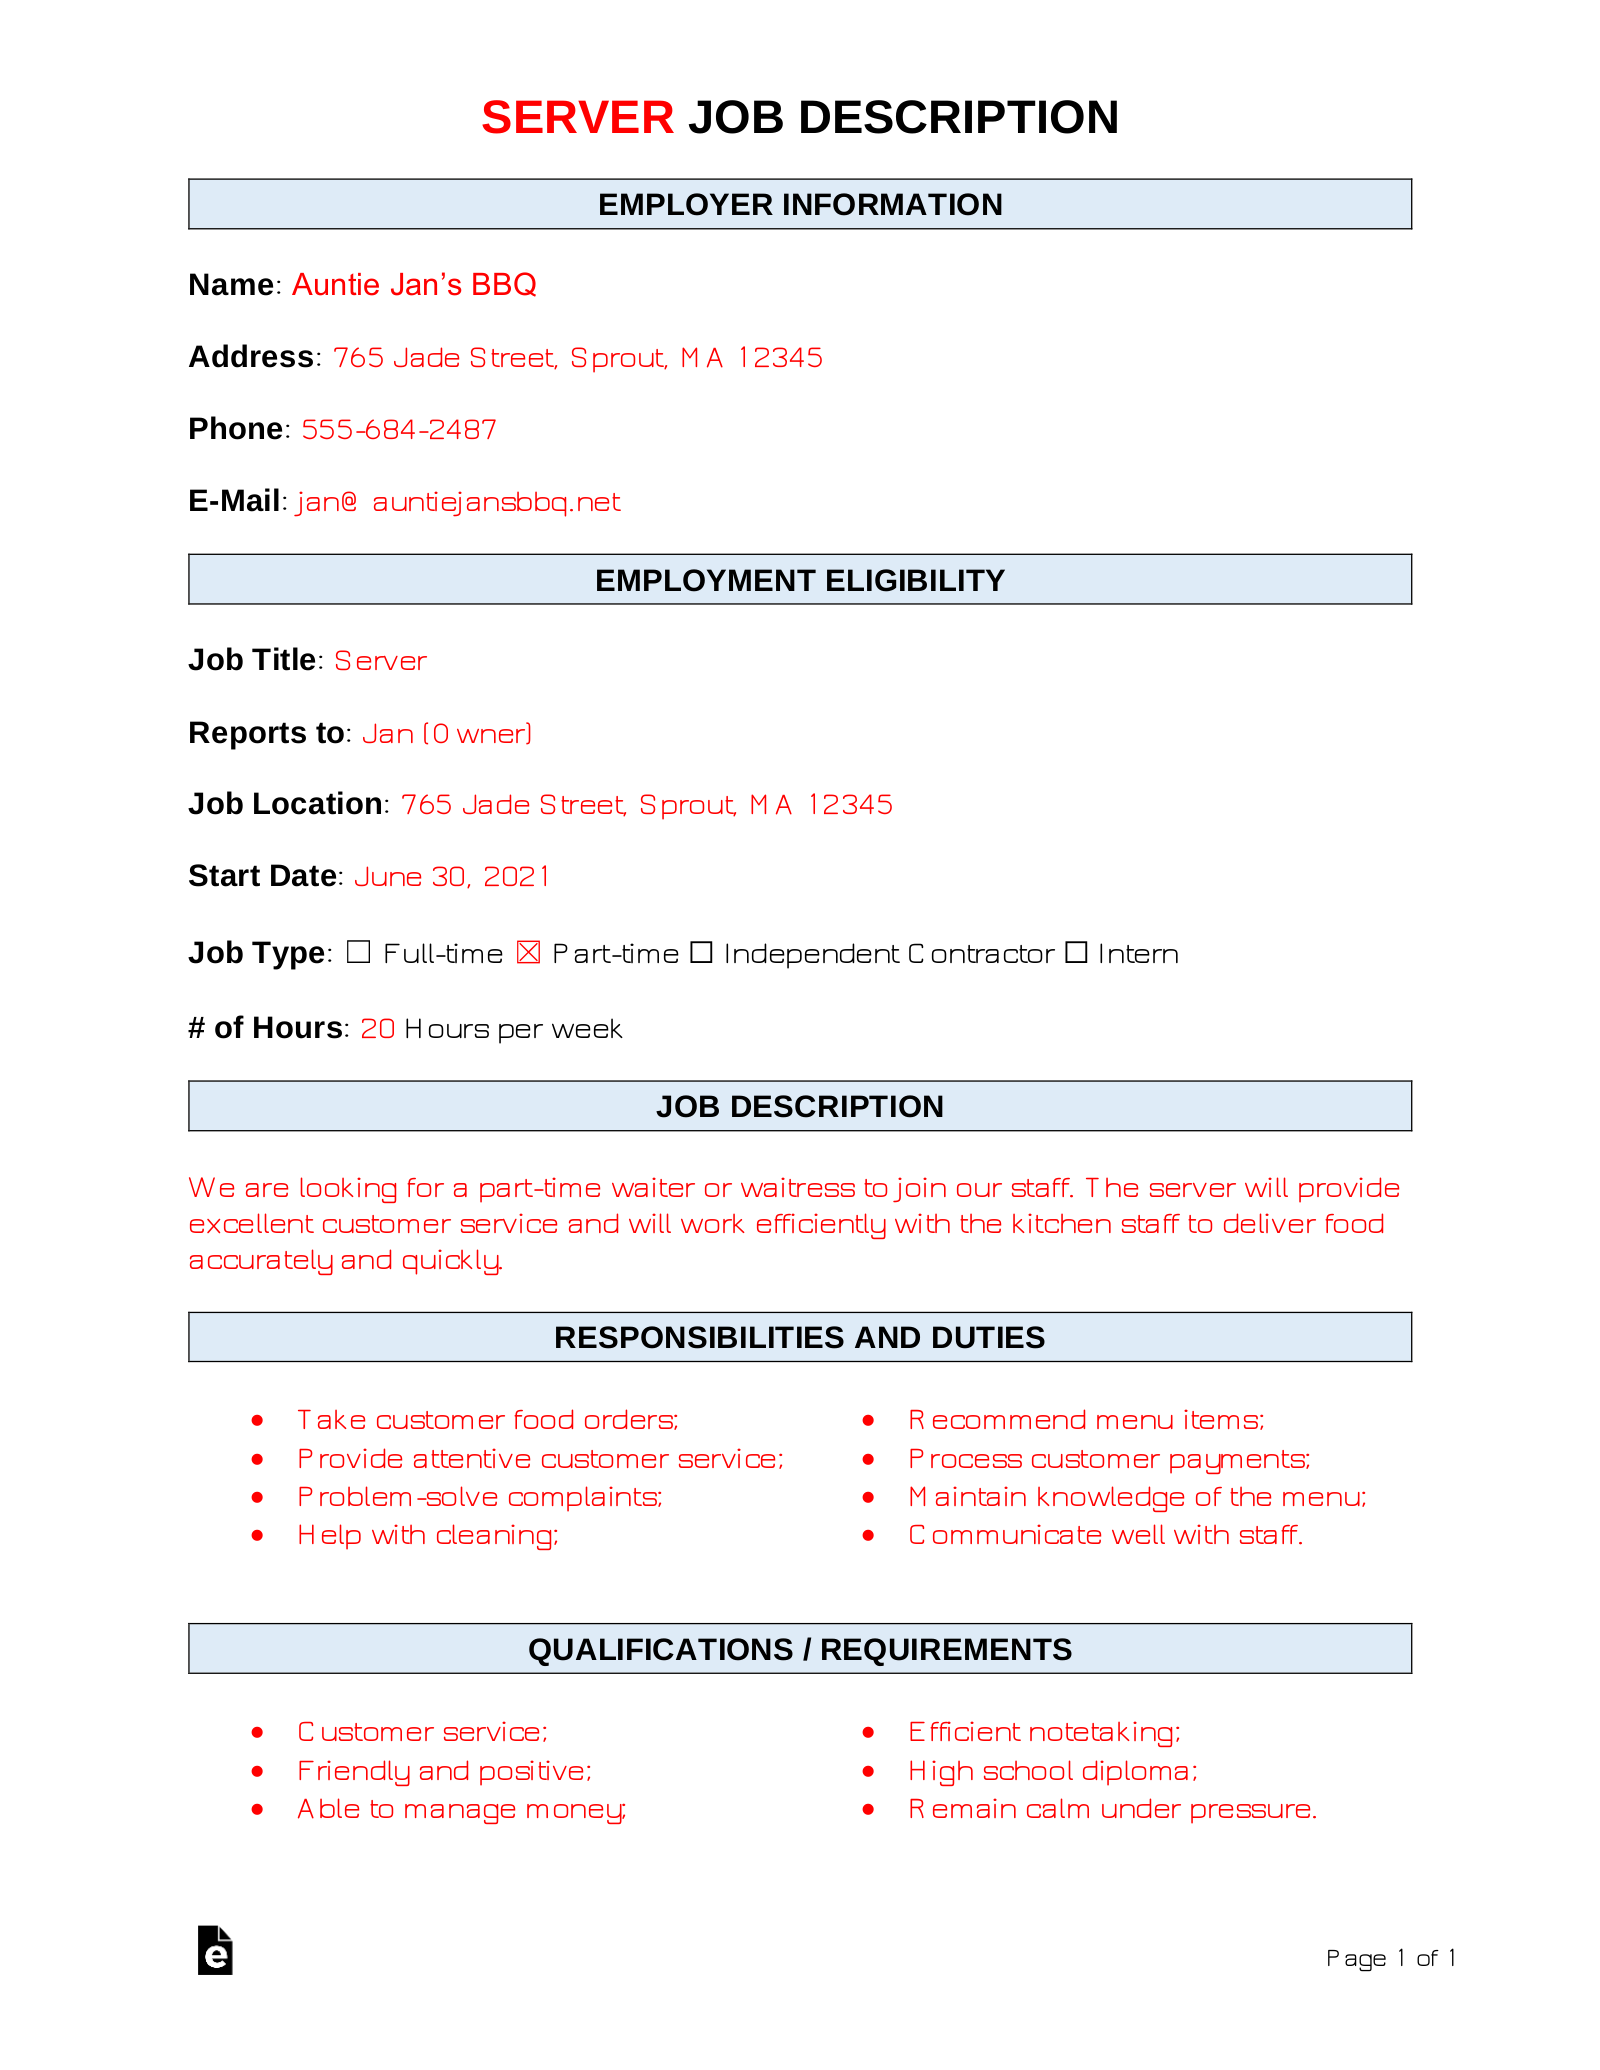 free-server-job-description-template-sample-word-pdf-eforms